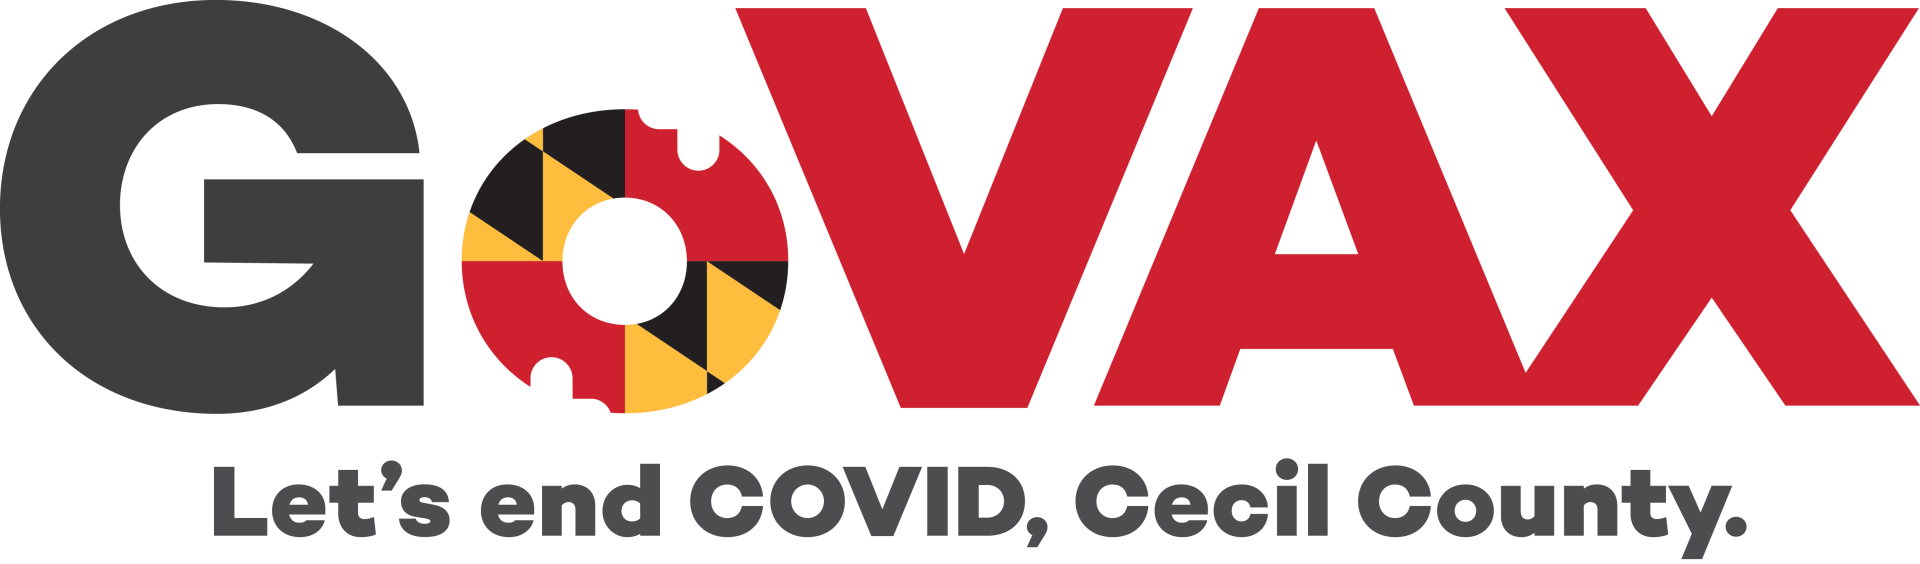 Cecil County Government: Cecil County Novel Coronavirus Updates – February